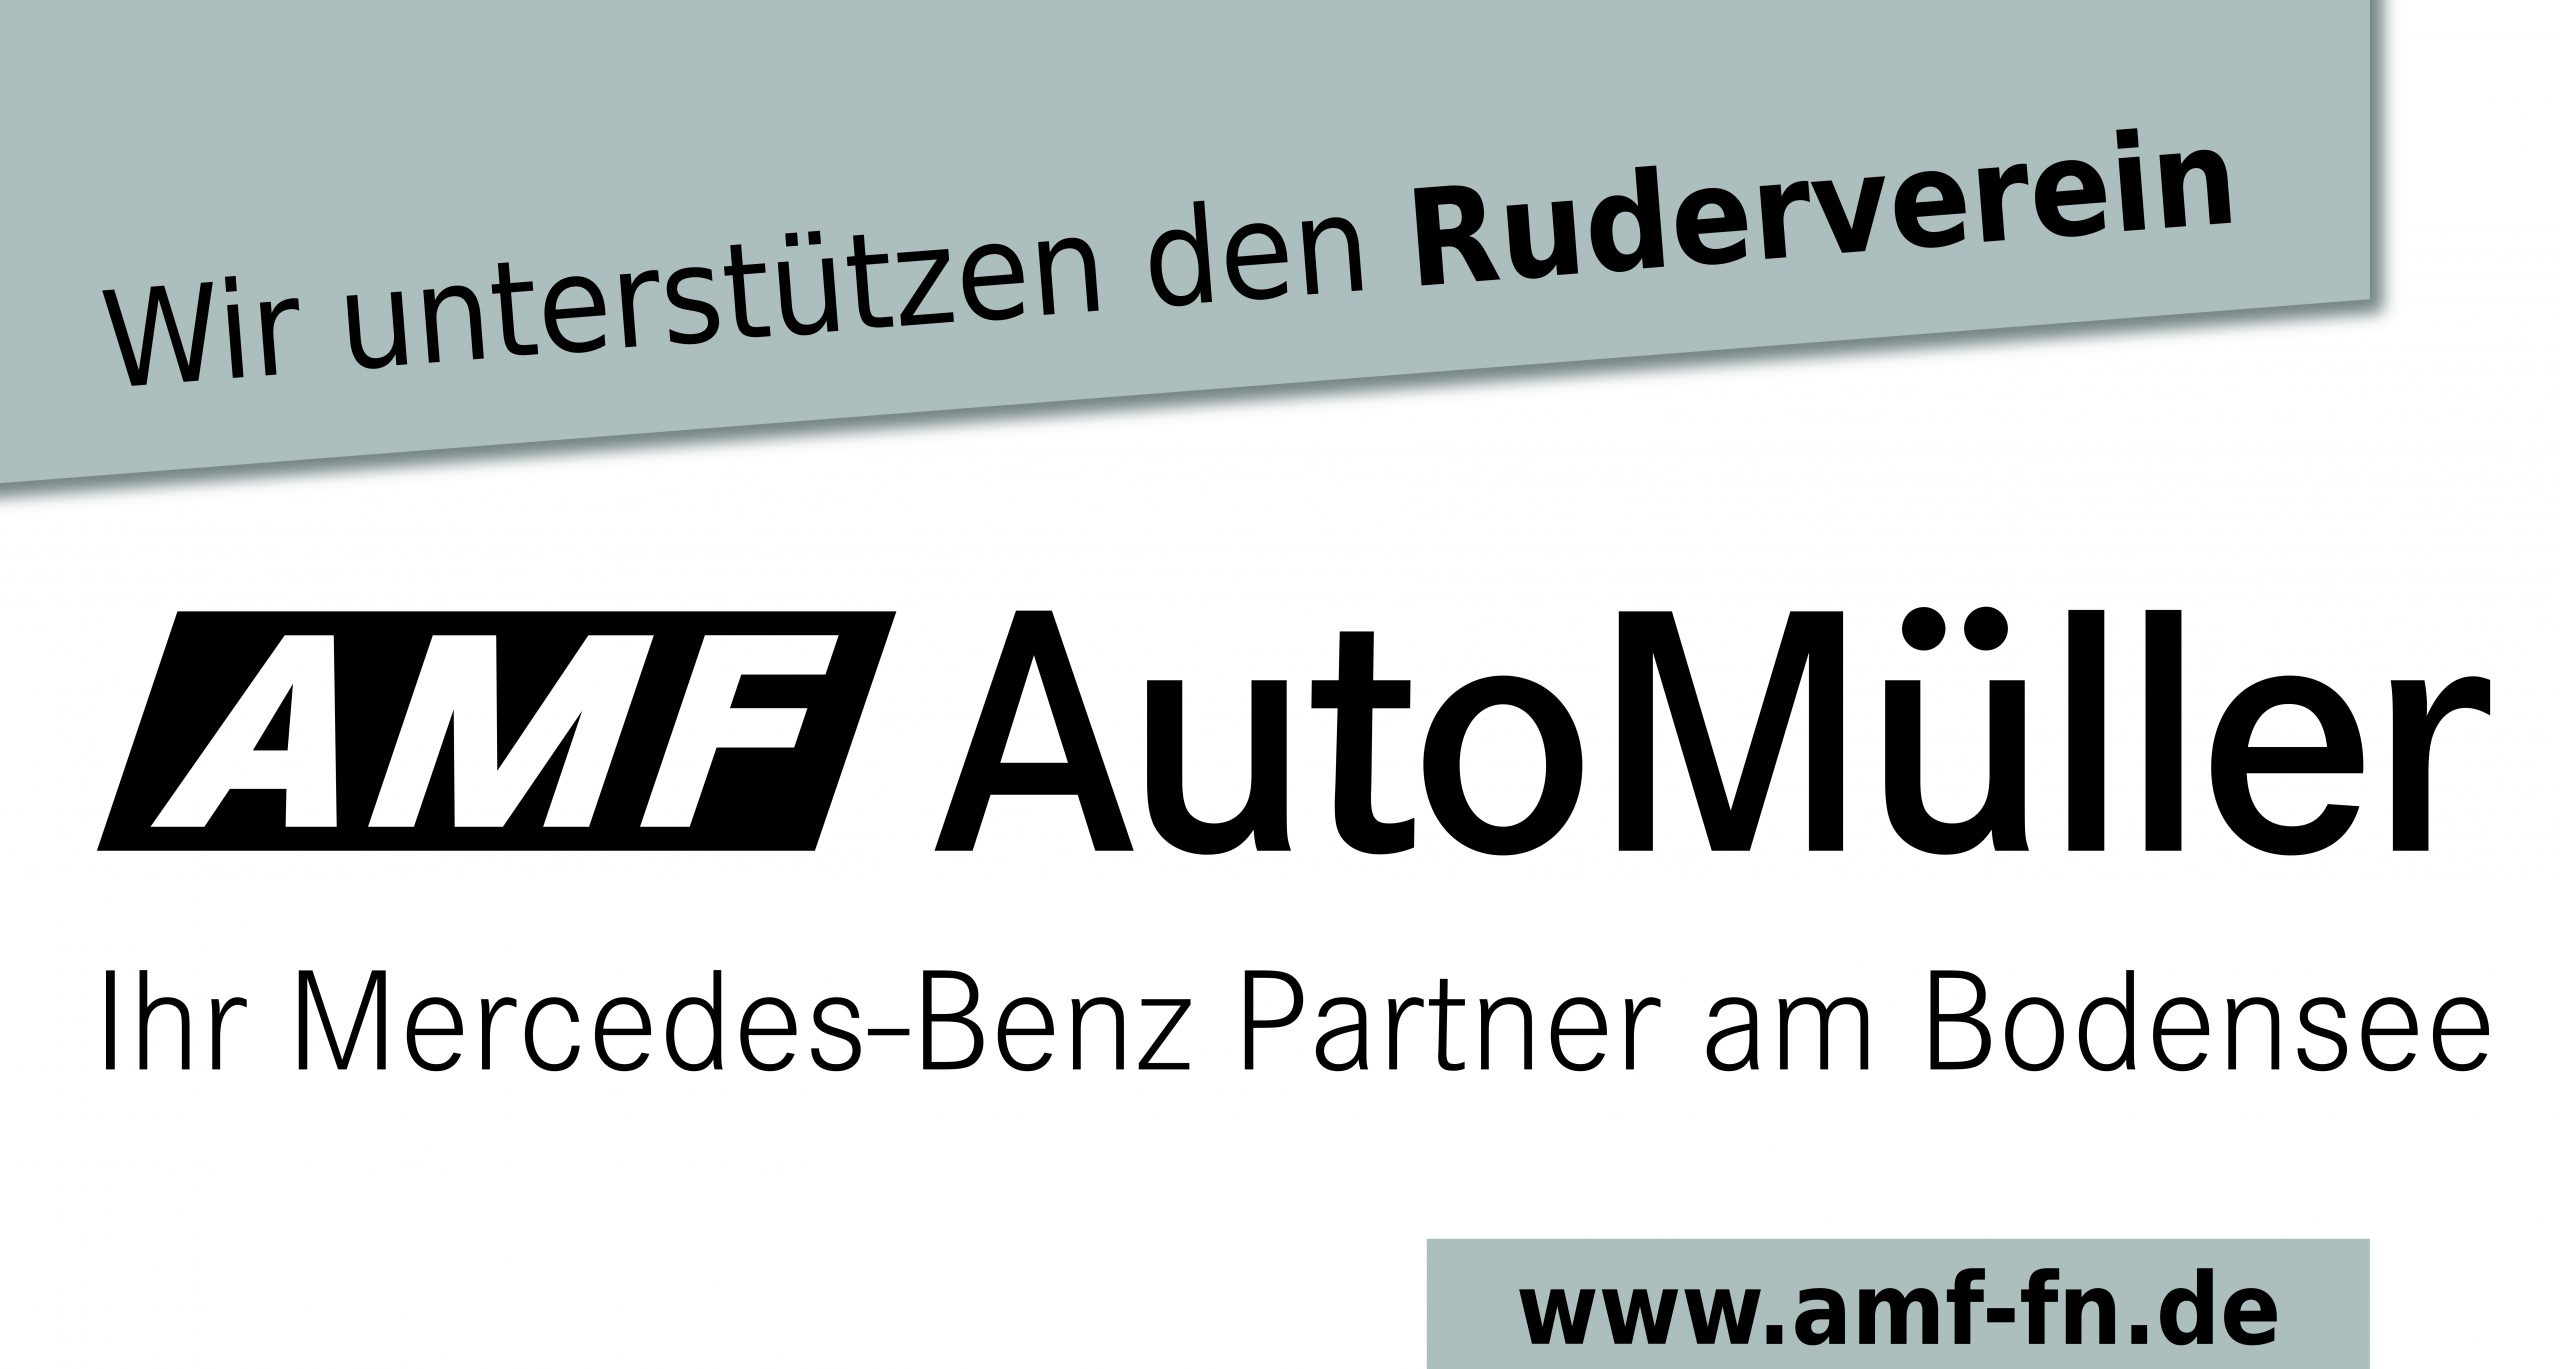 Partner des Ruderereins - AMF AutoMüller